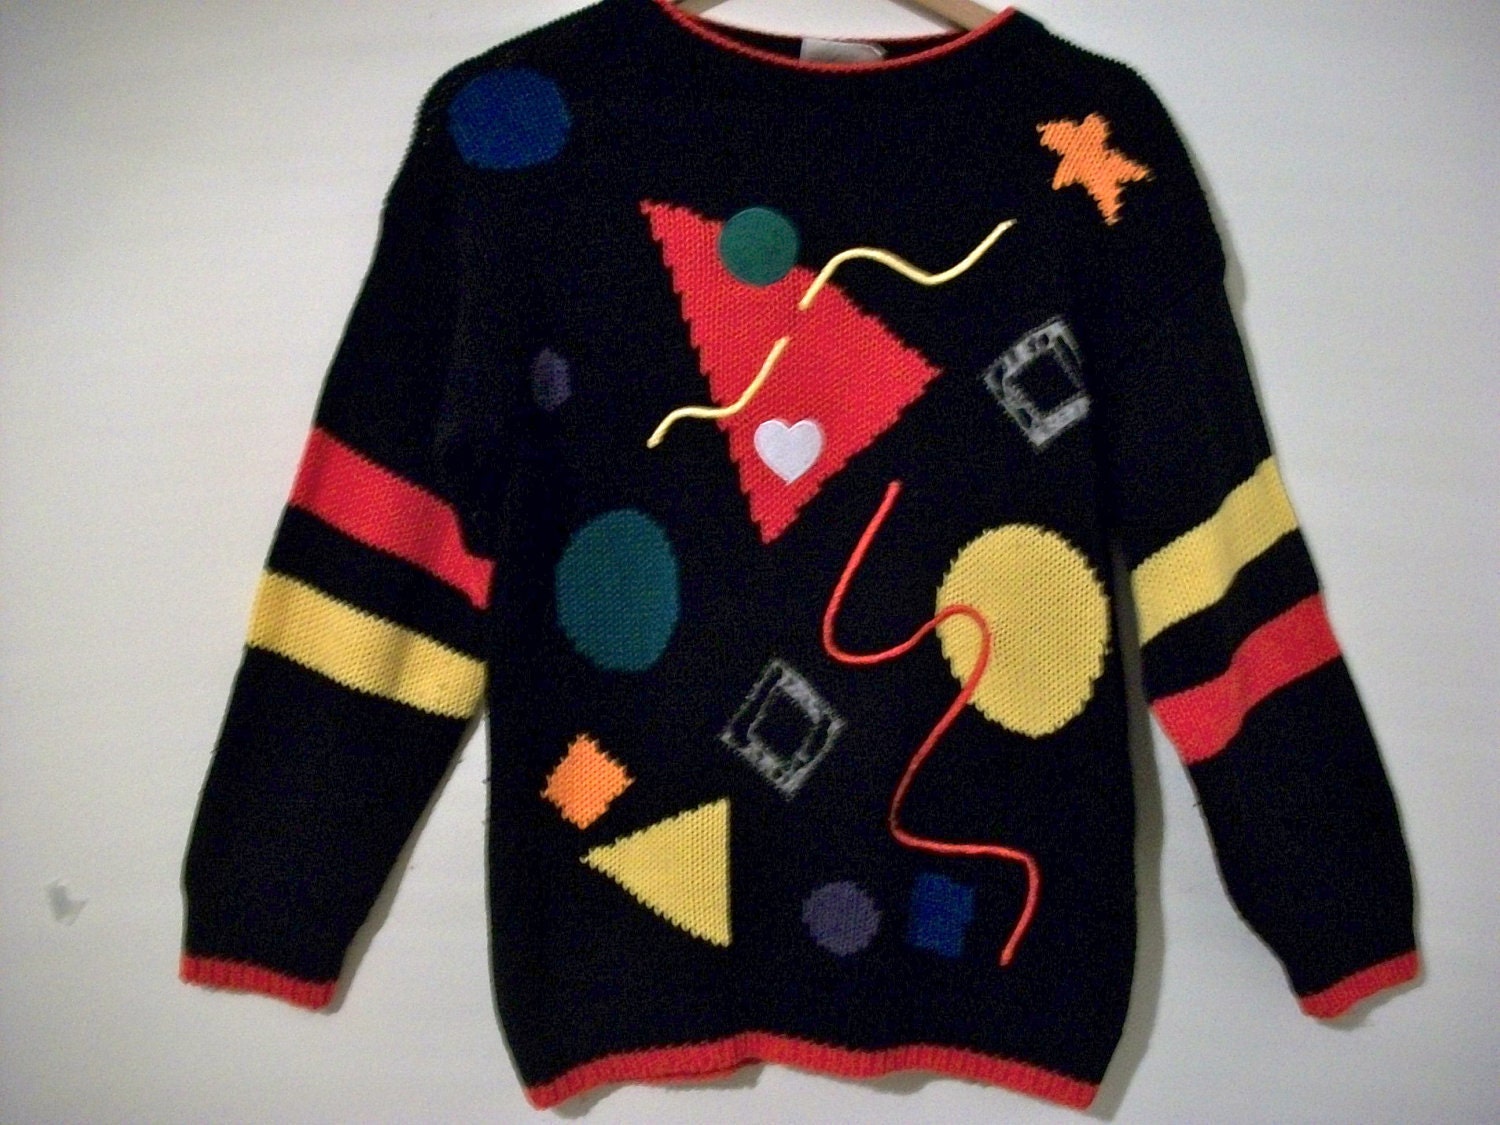 Vintage 90s wacky pattern sweater a la Saved by the Bell